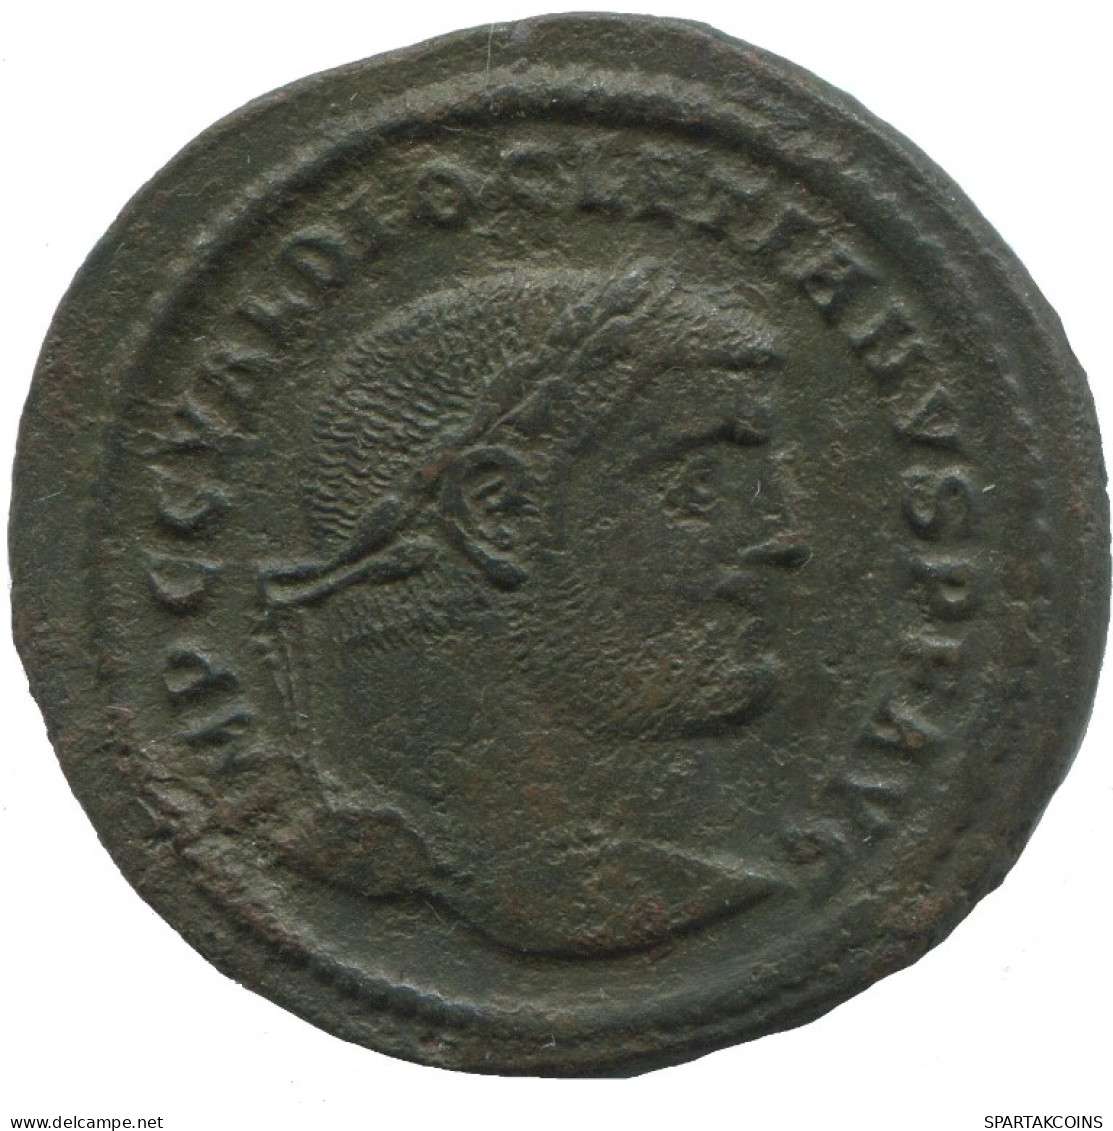 DIOCLETIAN HTA AD284-305 GENIO POPV L I ROMANI 9g/30mm #ANN1621.30.F.A - The Tetrarchy (284 AD Tot 307 AD)